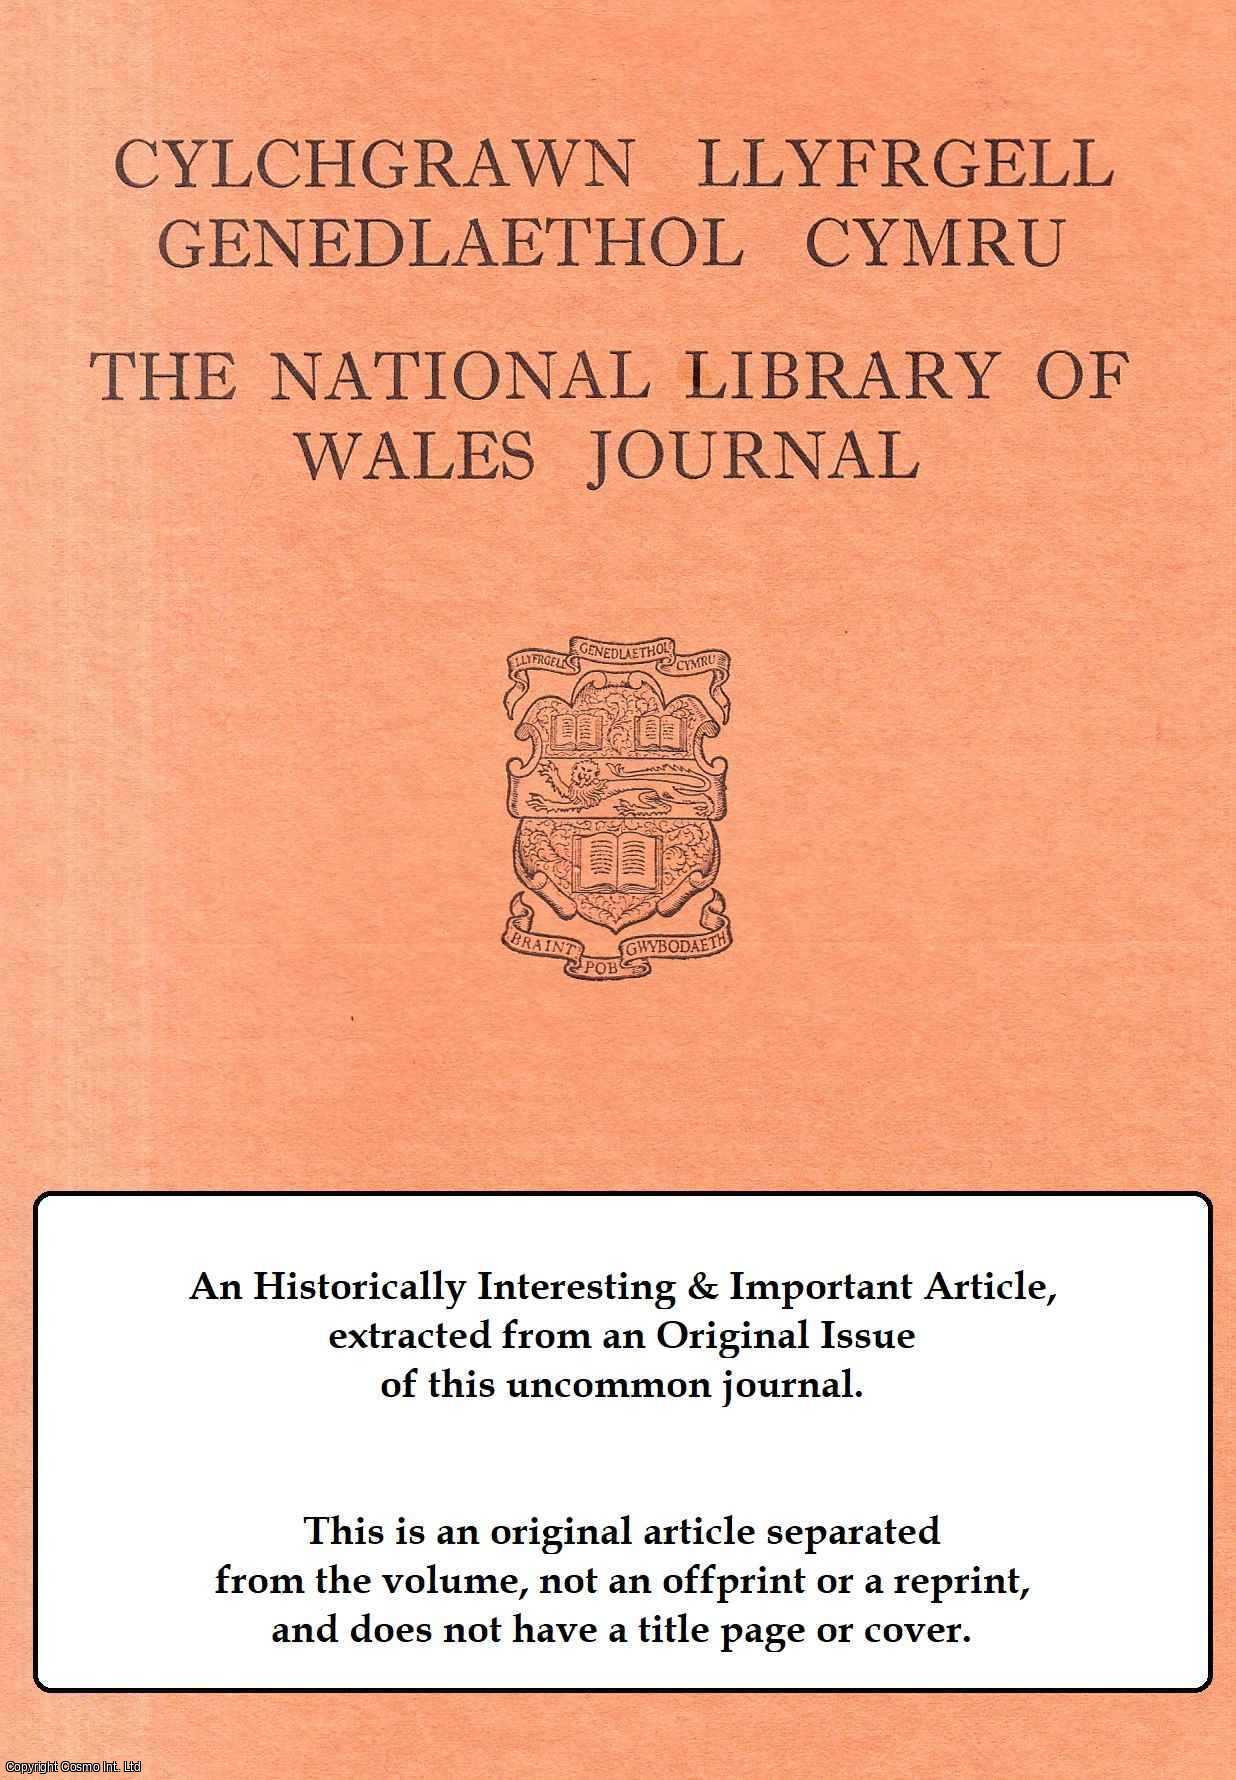 E. D. Jones - Lyfrau Cofion a Chyfrifon Owen Thomas 1729-1775. An original article from The National Library of Wales Journal, 1970.